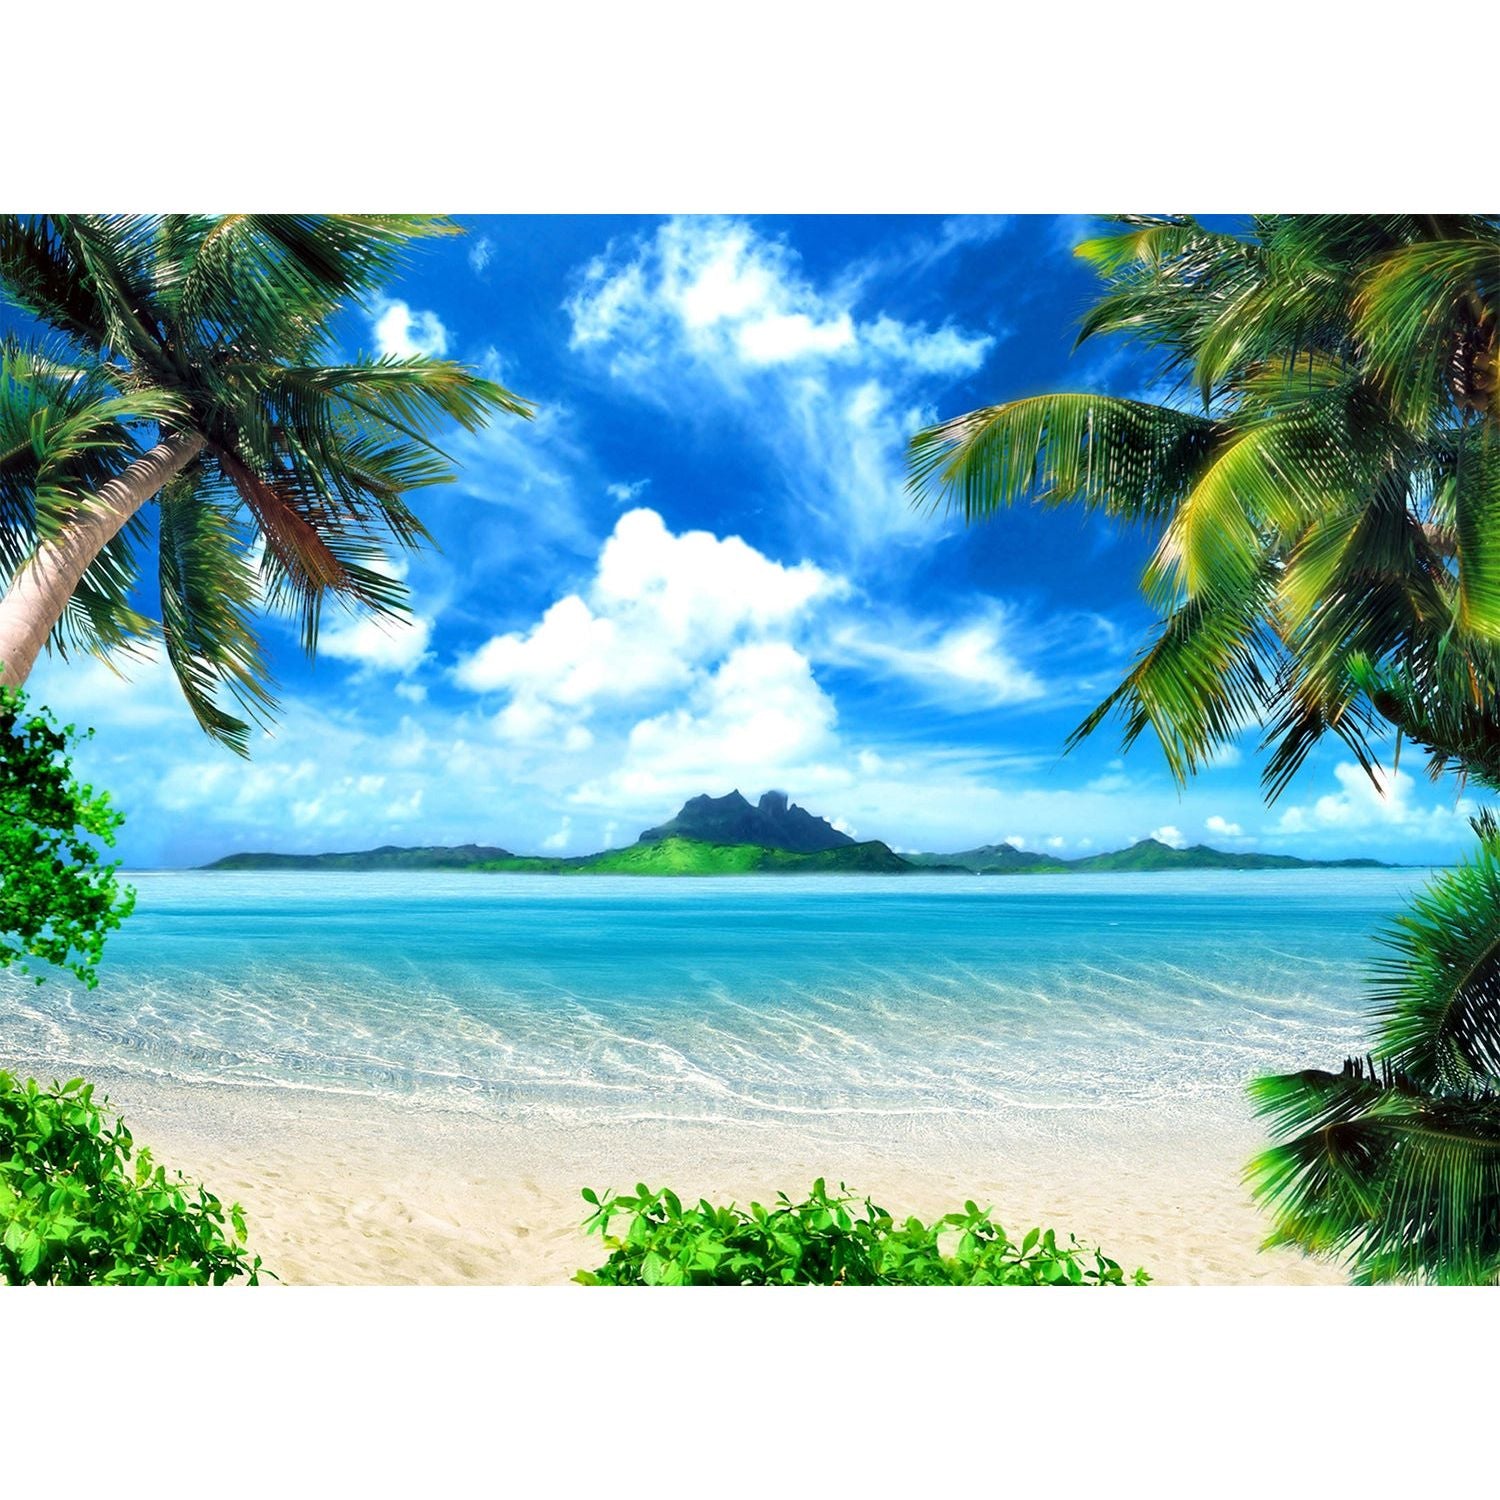 Eternal Summer: Palm Paradise and Ocean Bliss